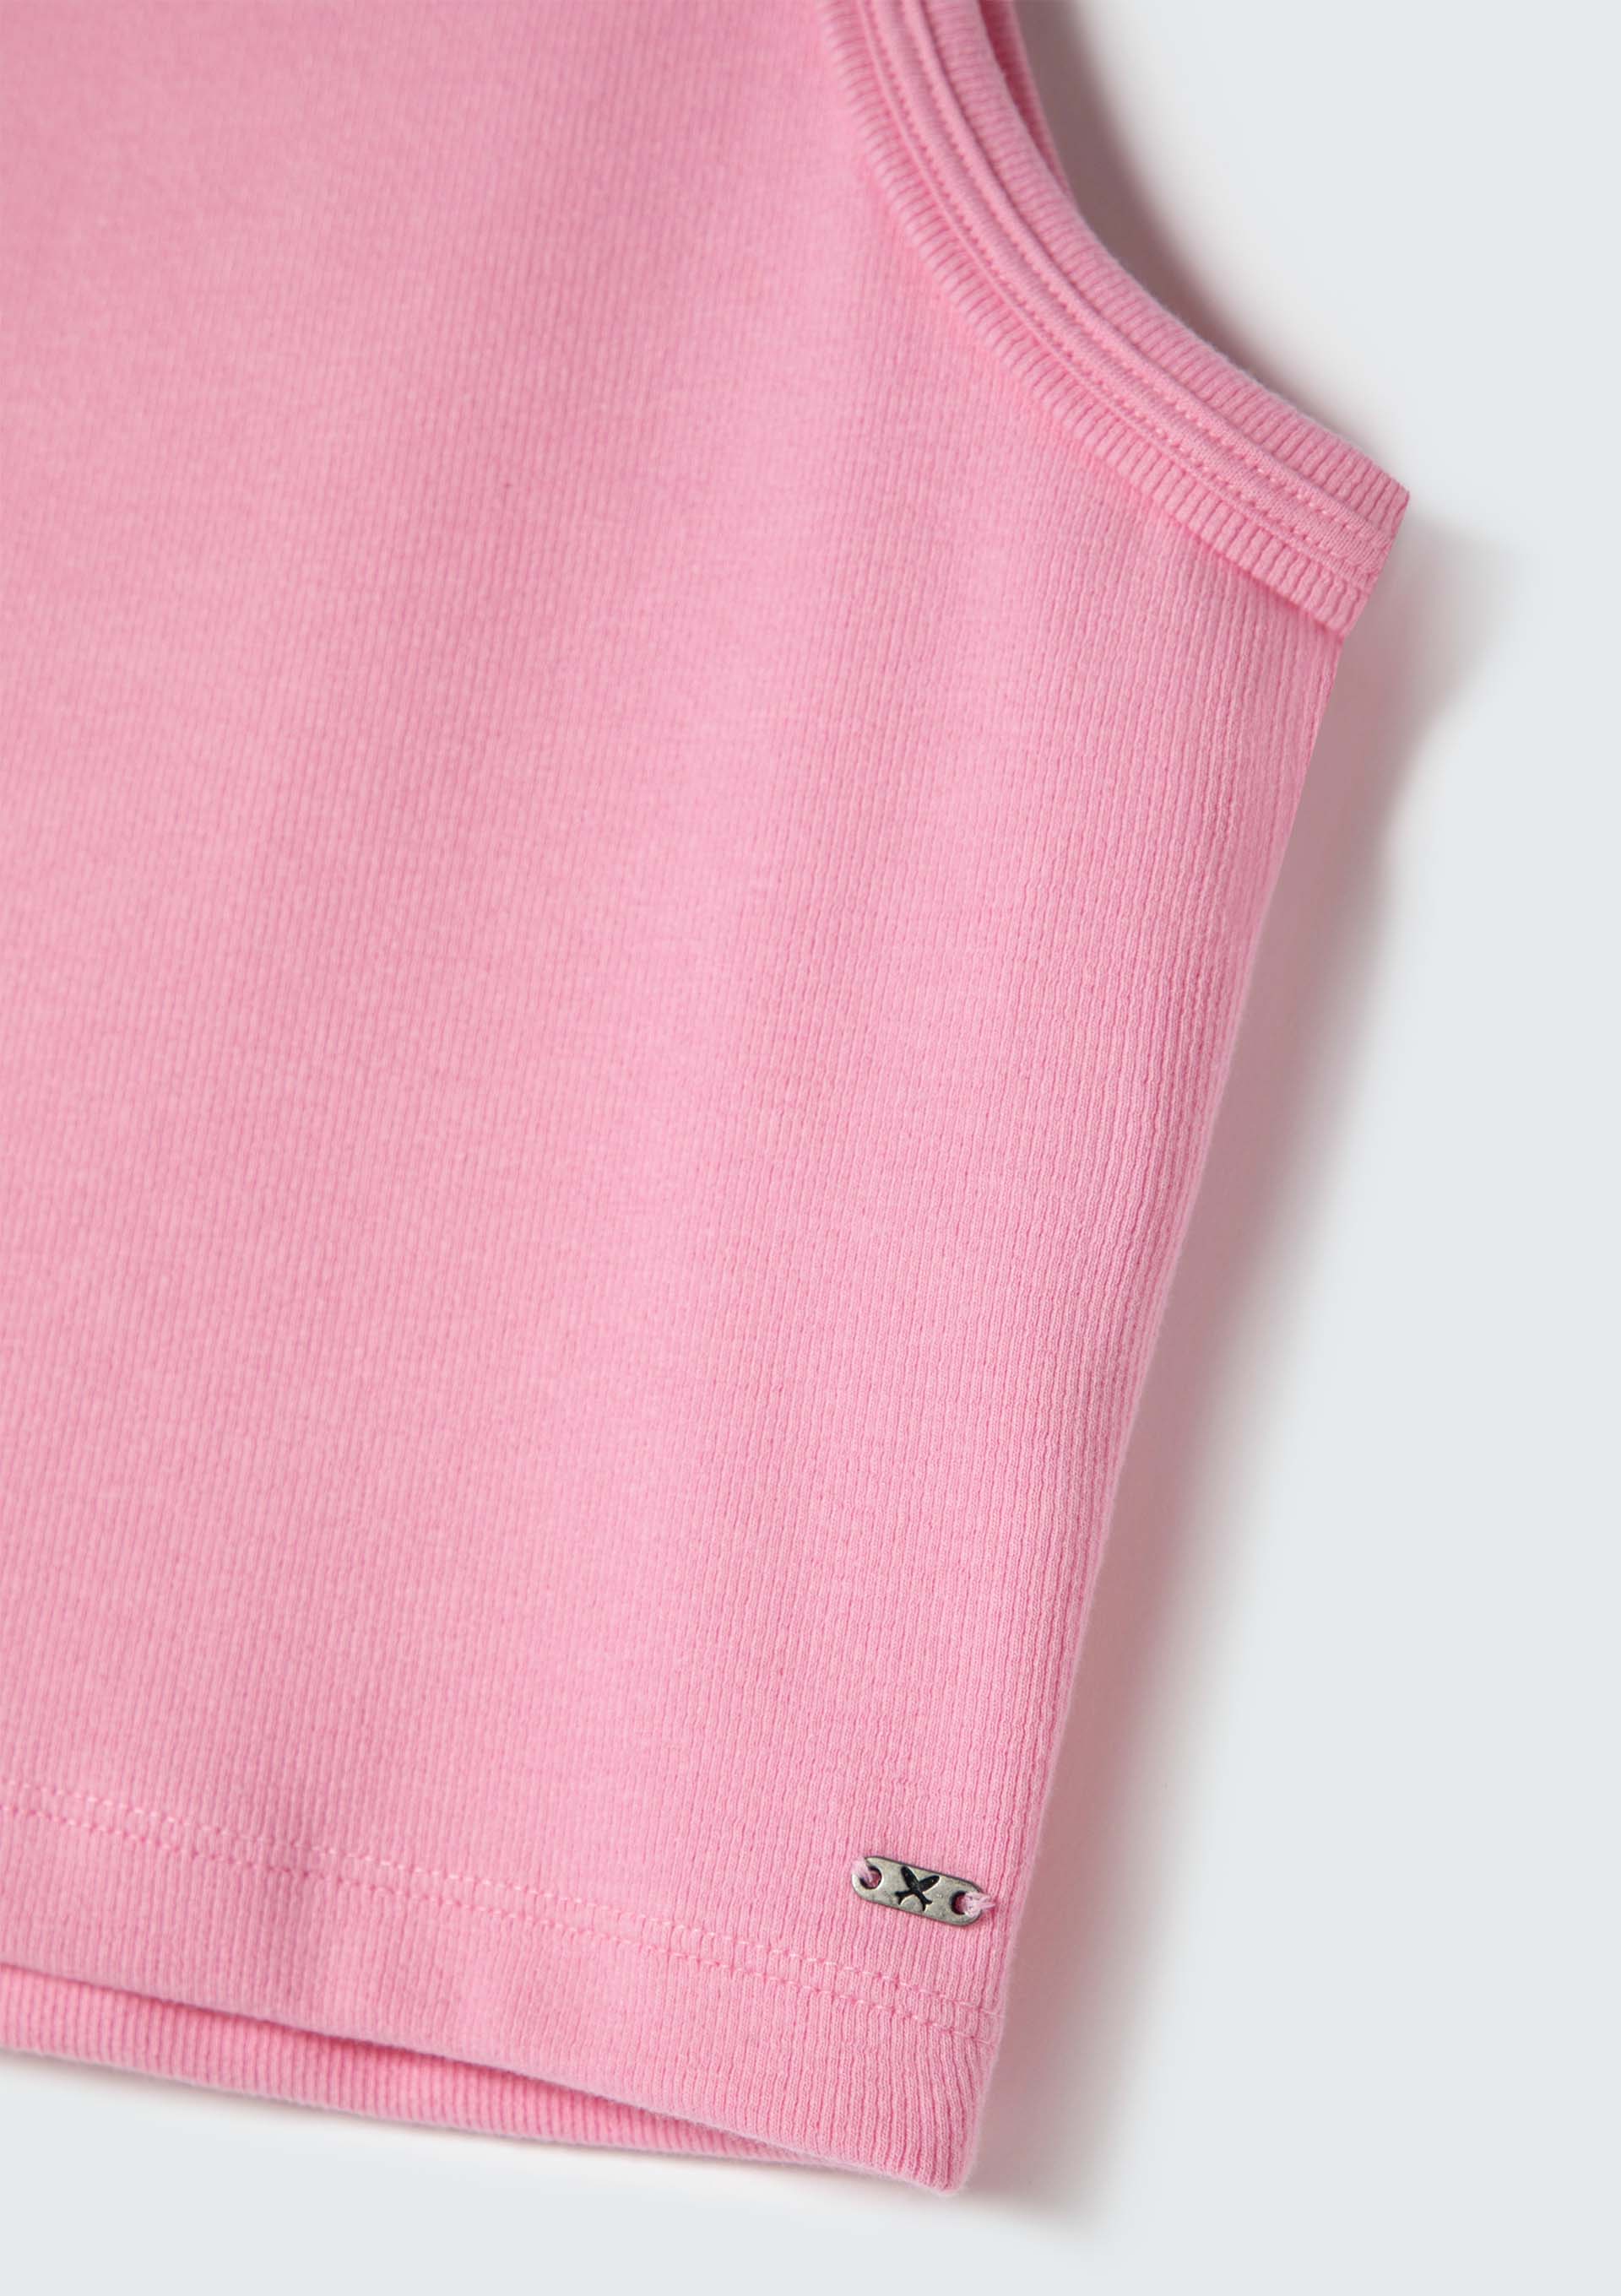 Camiseta Básica Infantil Smiles Rosa Pink - Dona Bellinha Boutique